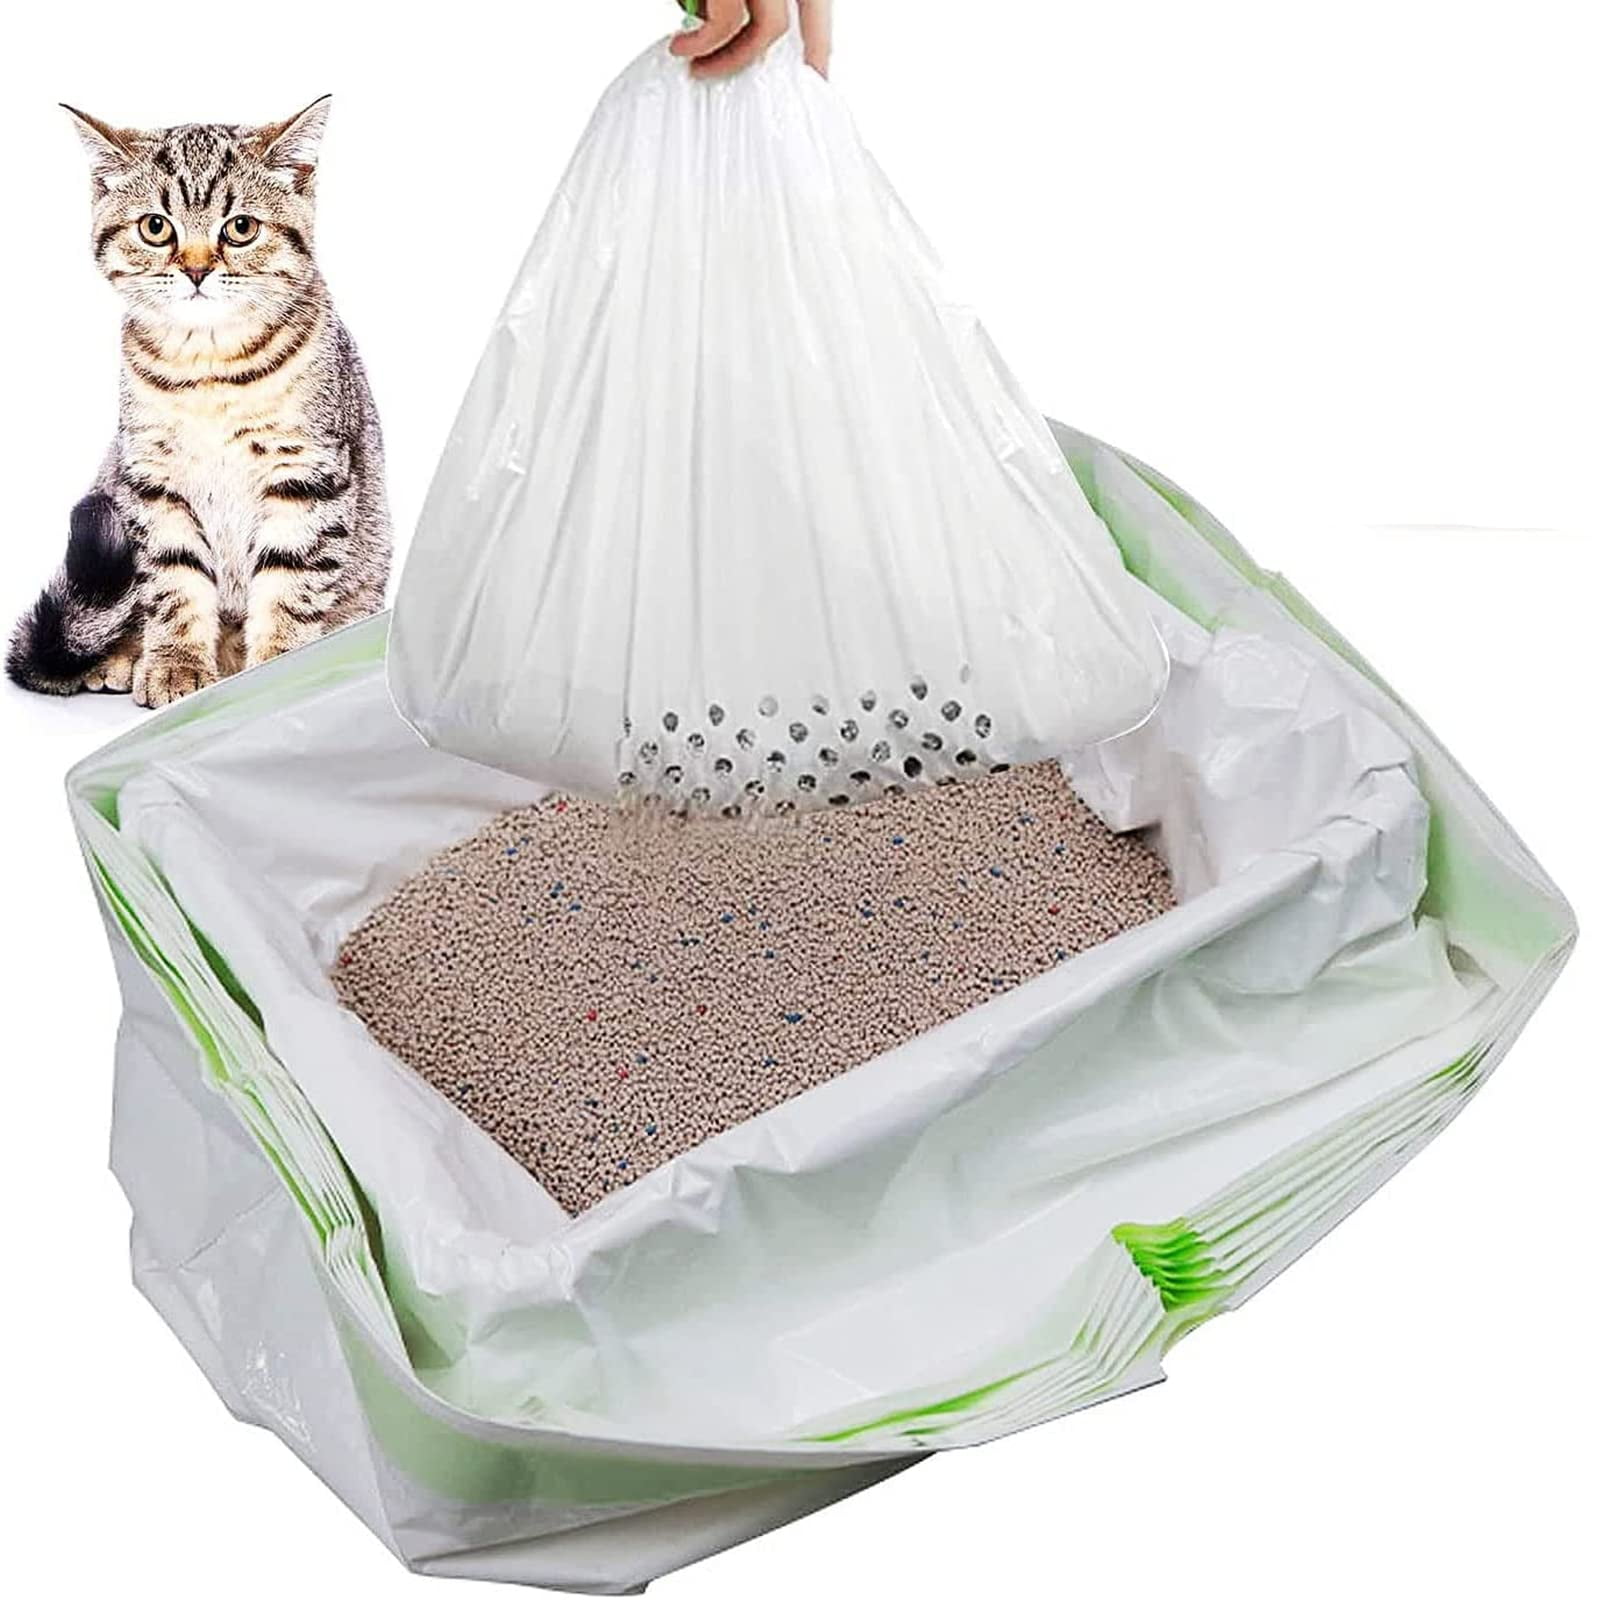 Pretty Litter Health Monitoring Cat Litter BIG 8 LB BAG 2 Month Supply  QuickSHIP | eBay